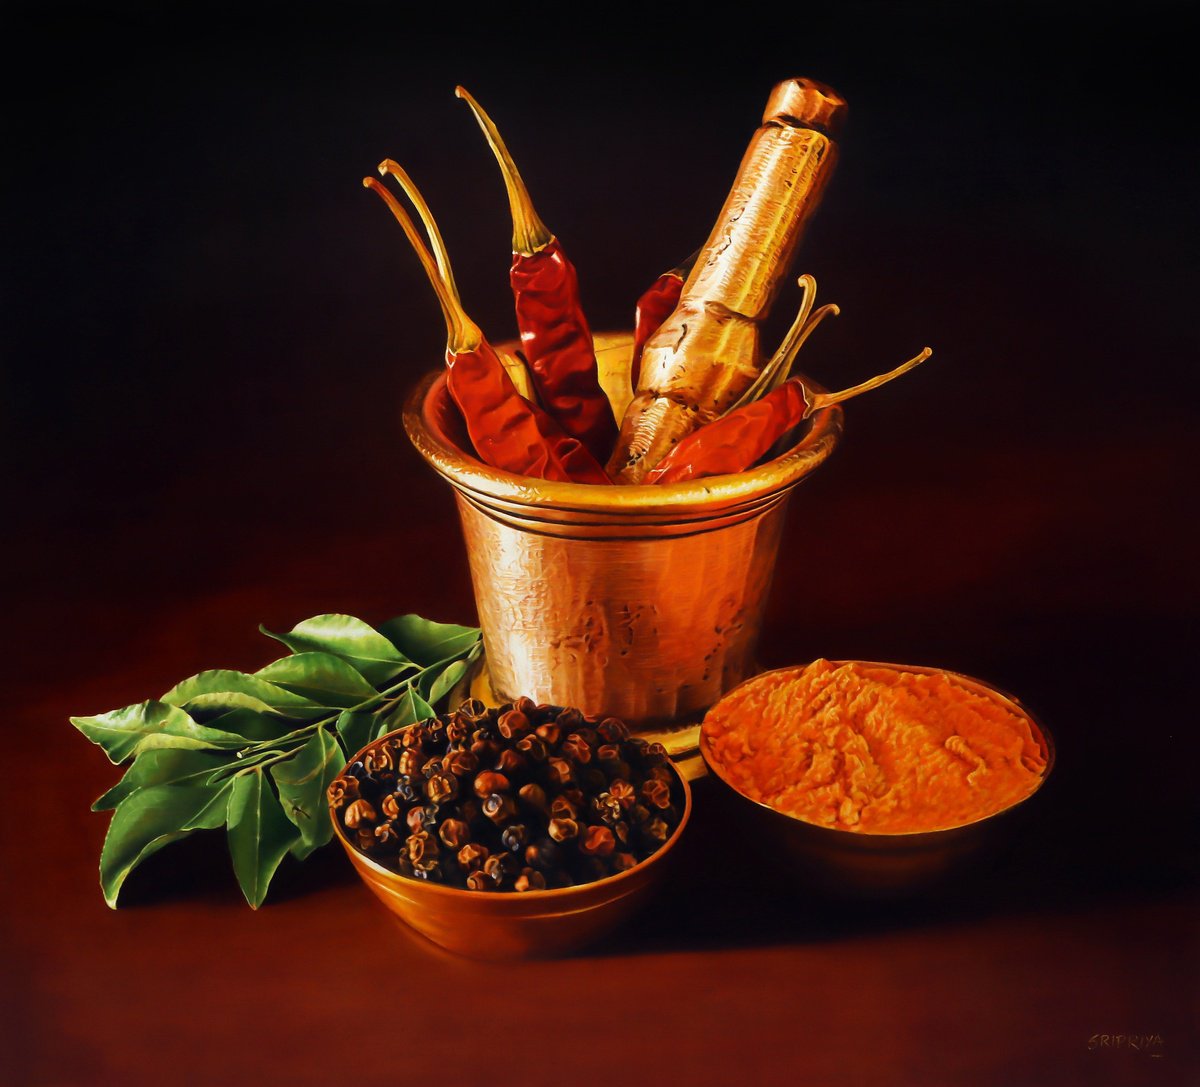 Swaad - the taste by Sripriya Mozumdar